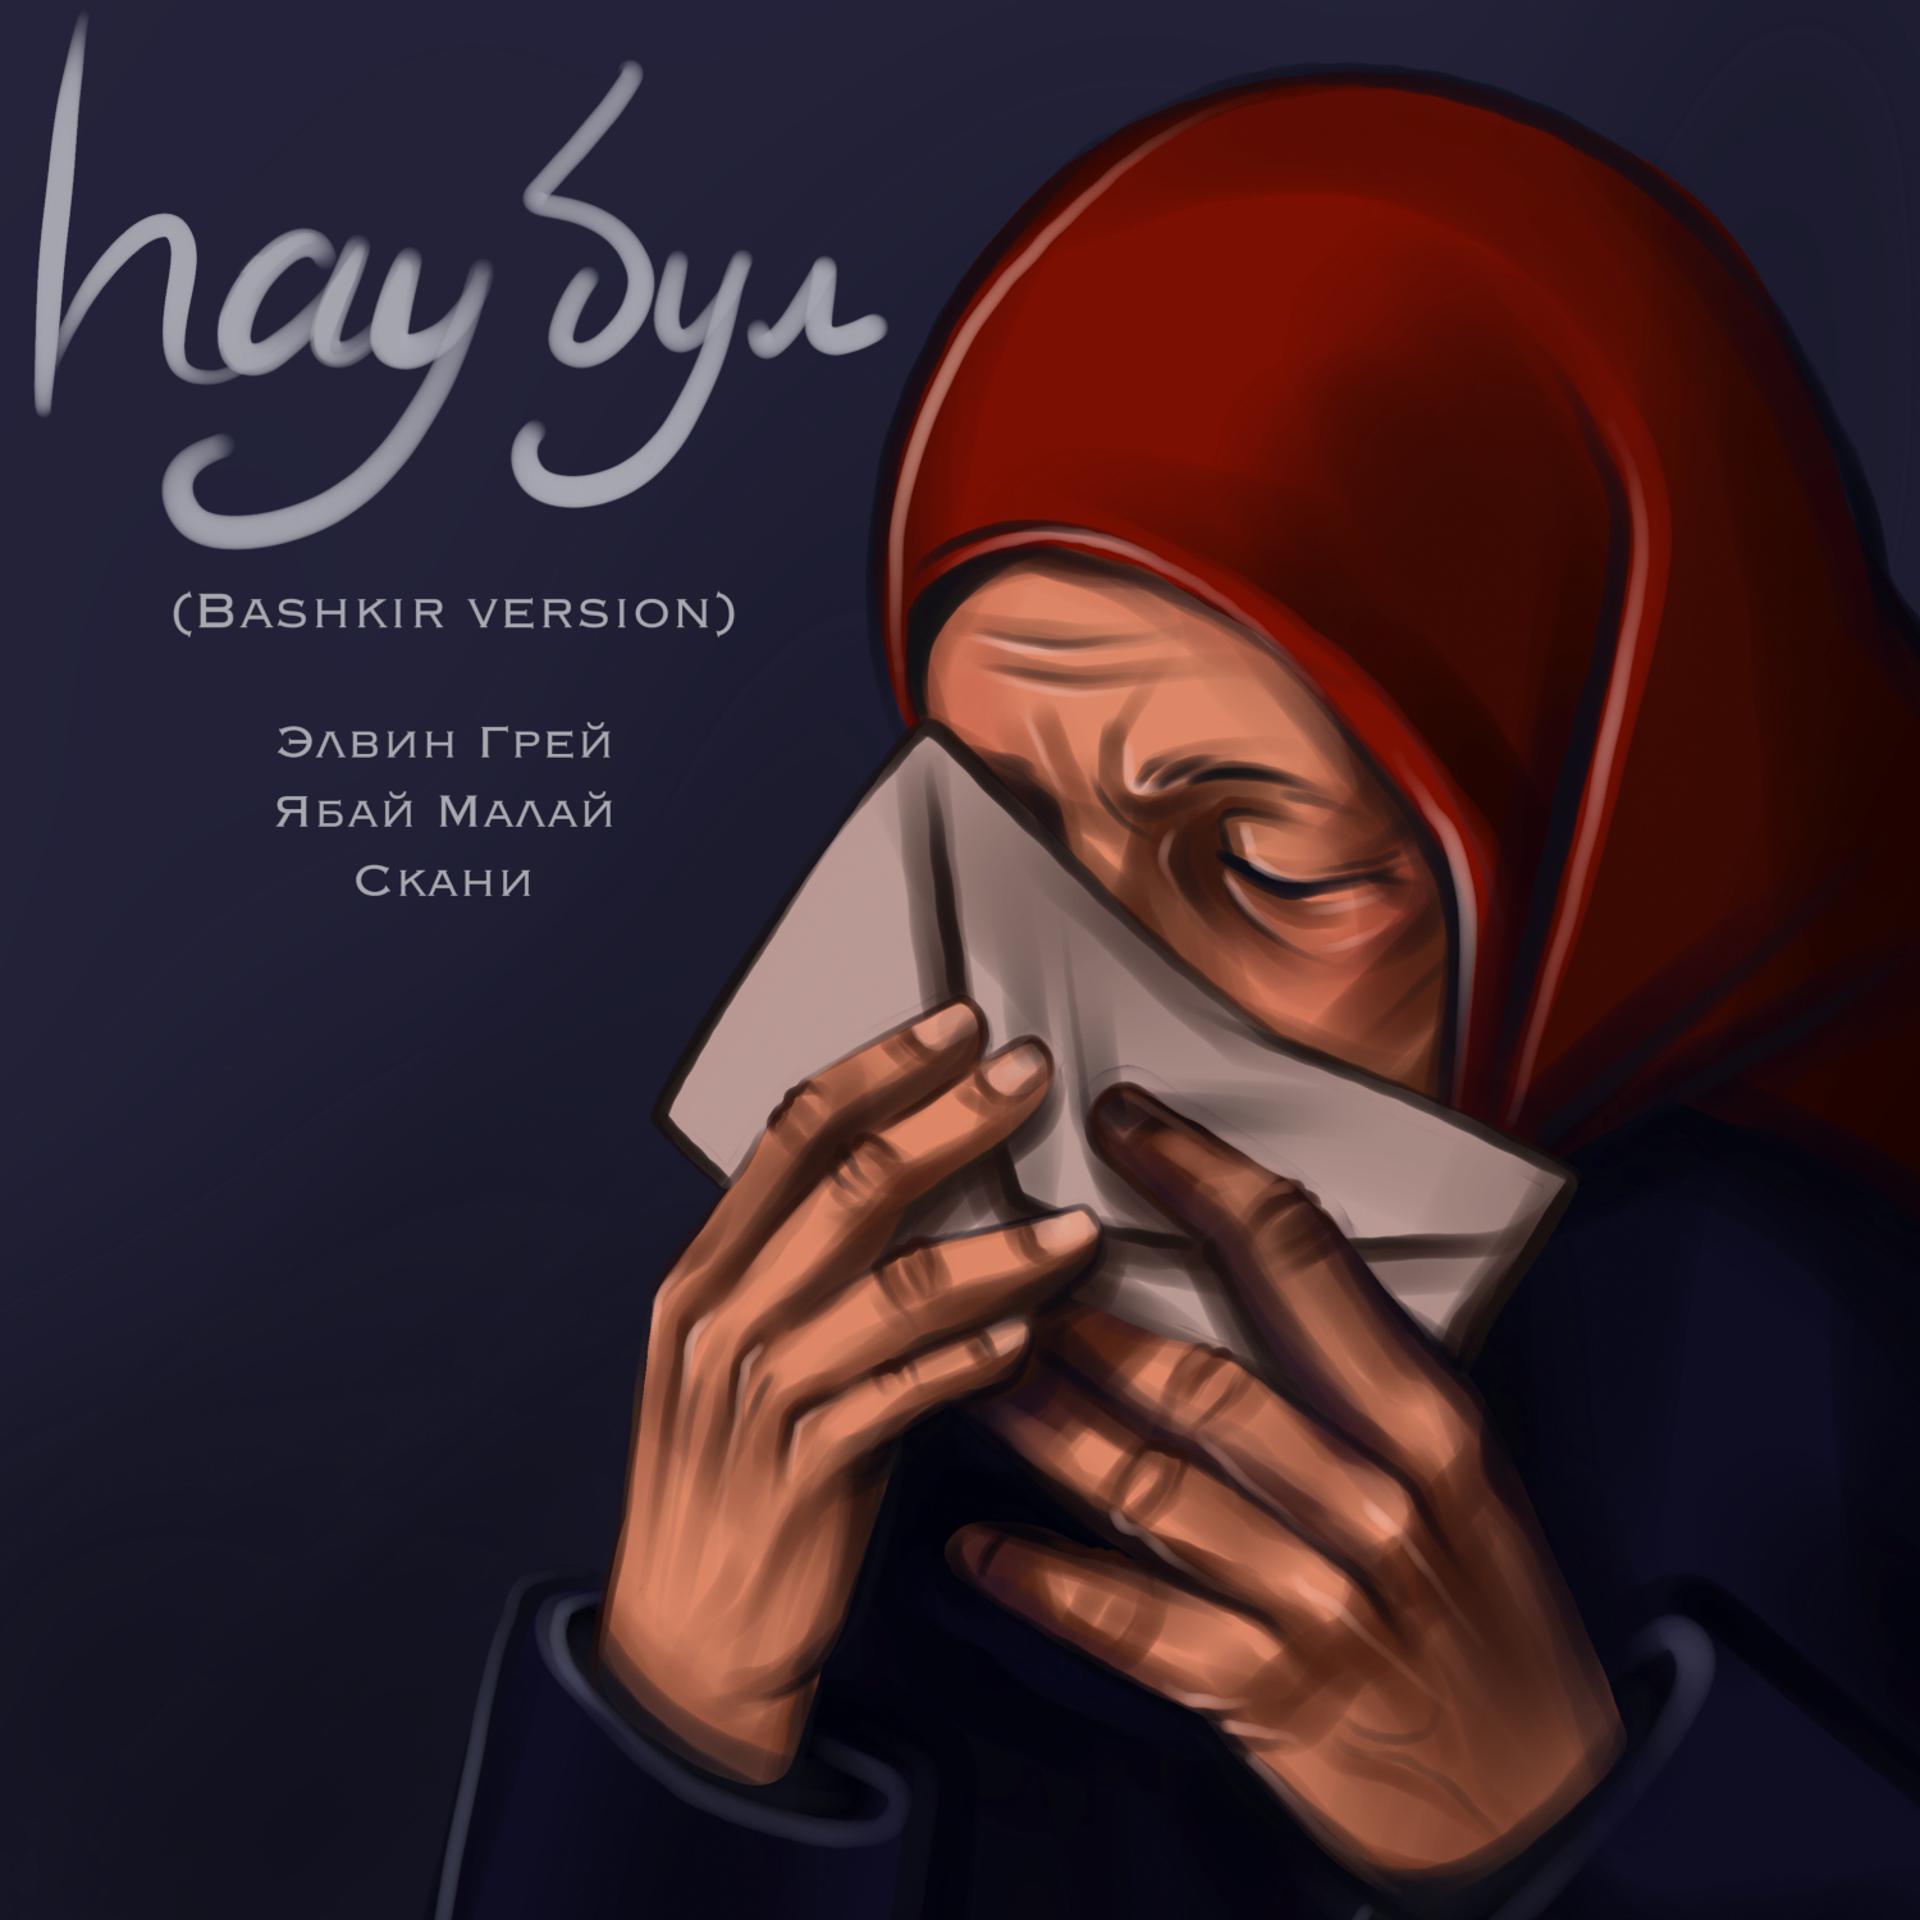 Постер к треку Элвин Грей, Ябай Малай, Искандэр - Һау бул (Bashkir version)